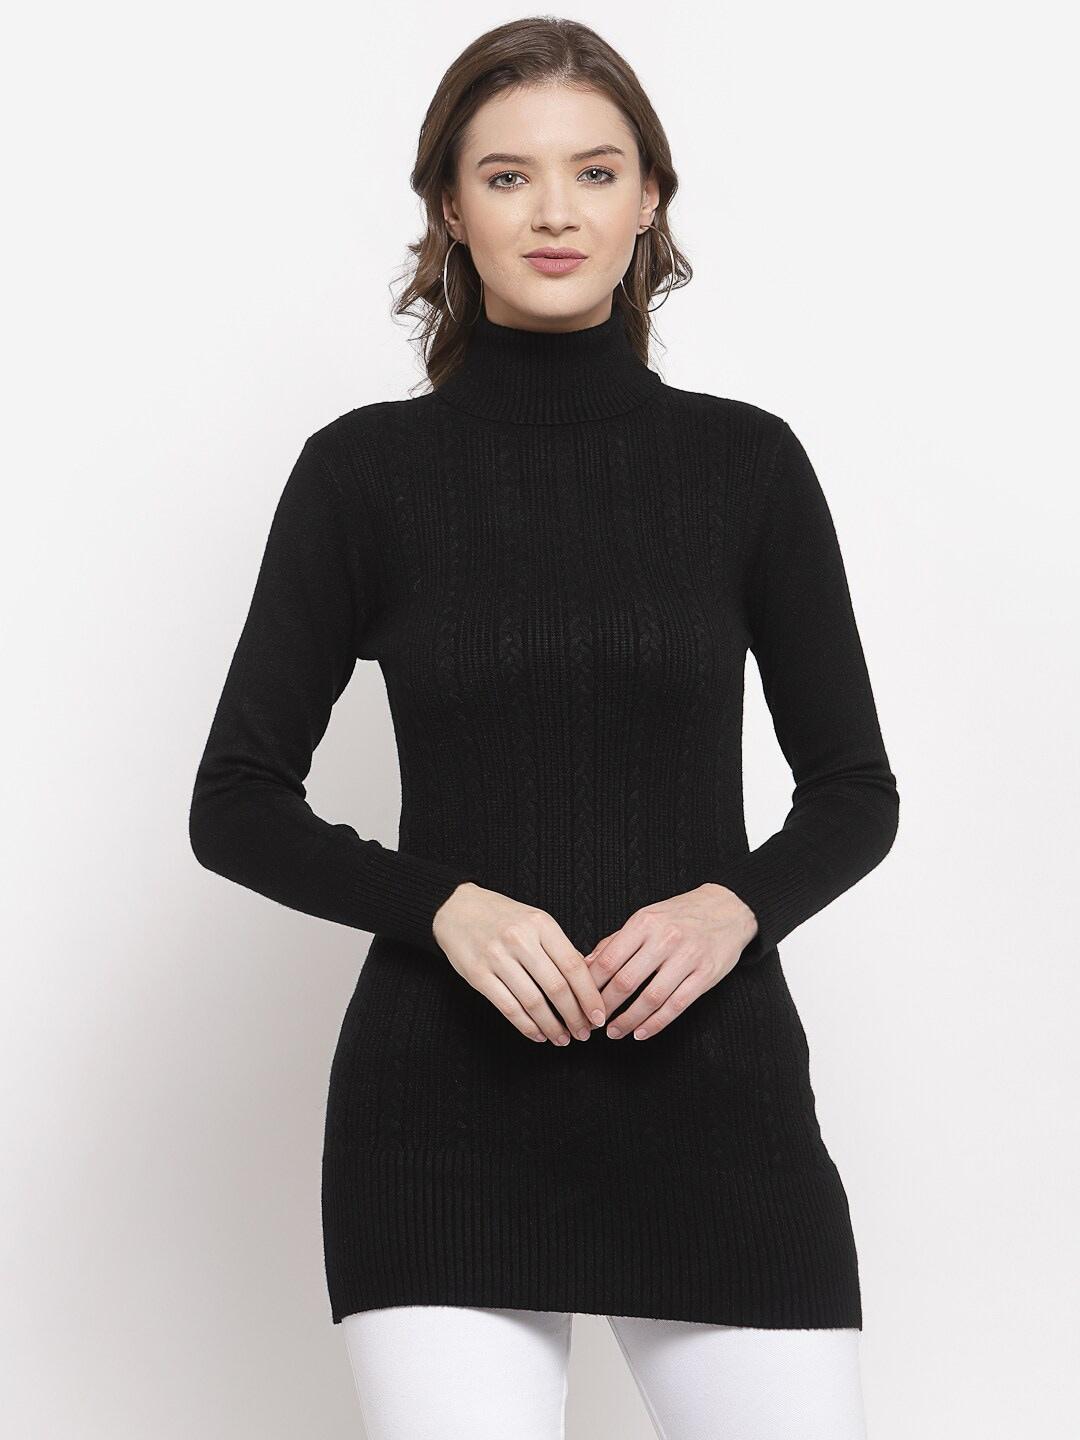 mafadeny women black longline pullover sweater